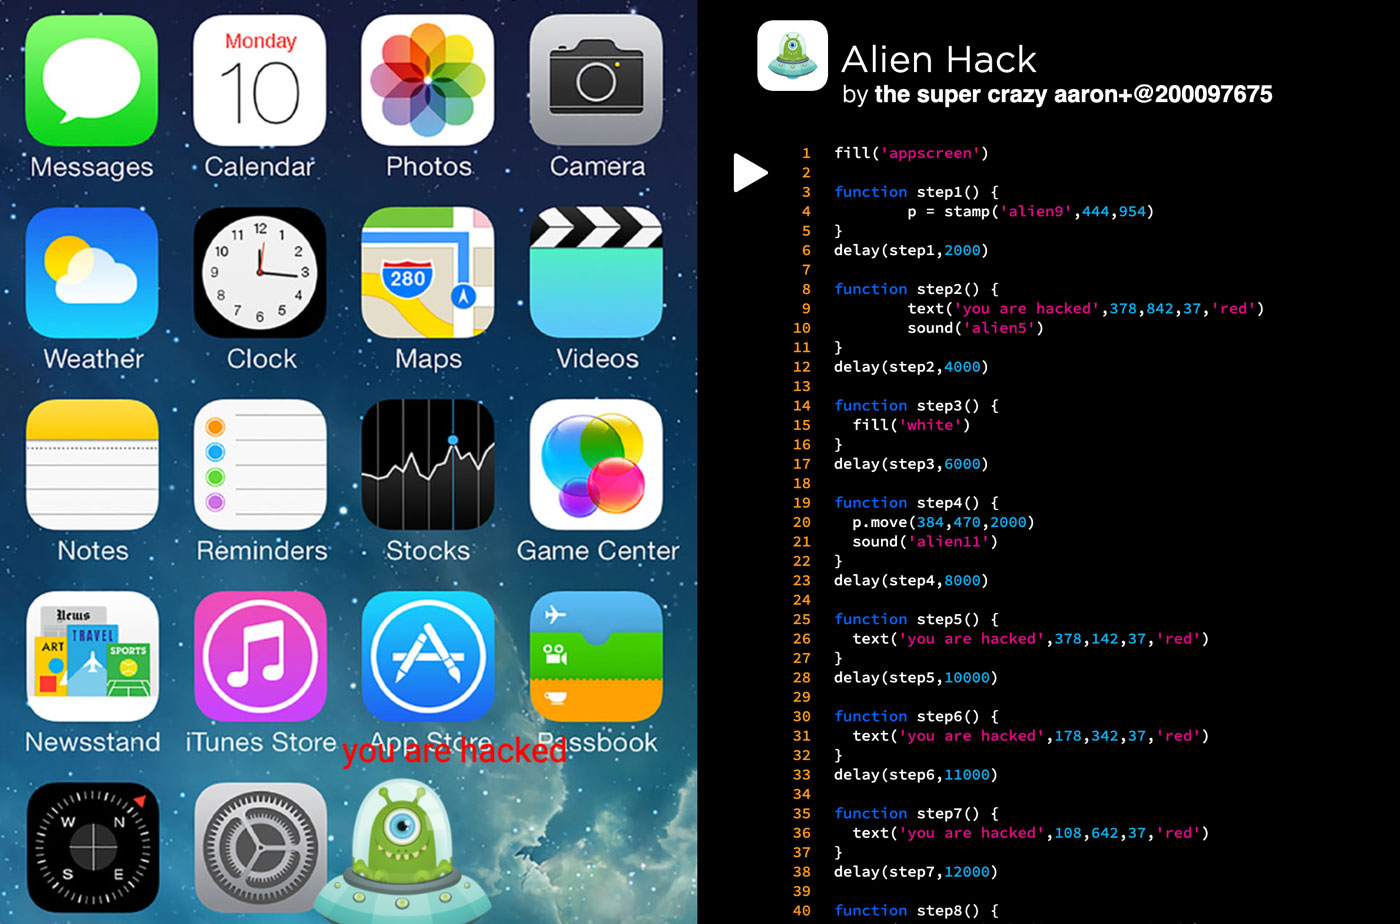 A screenshot of the Alien Hack Bitsbox app